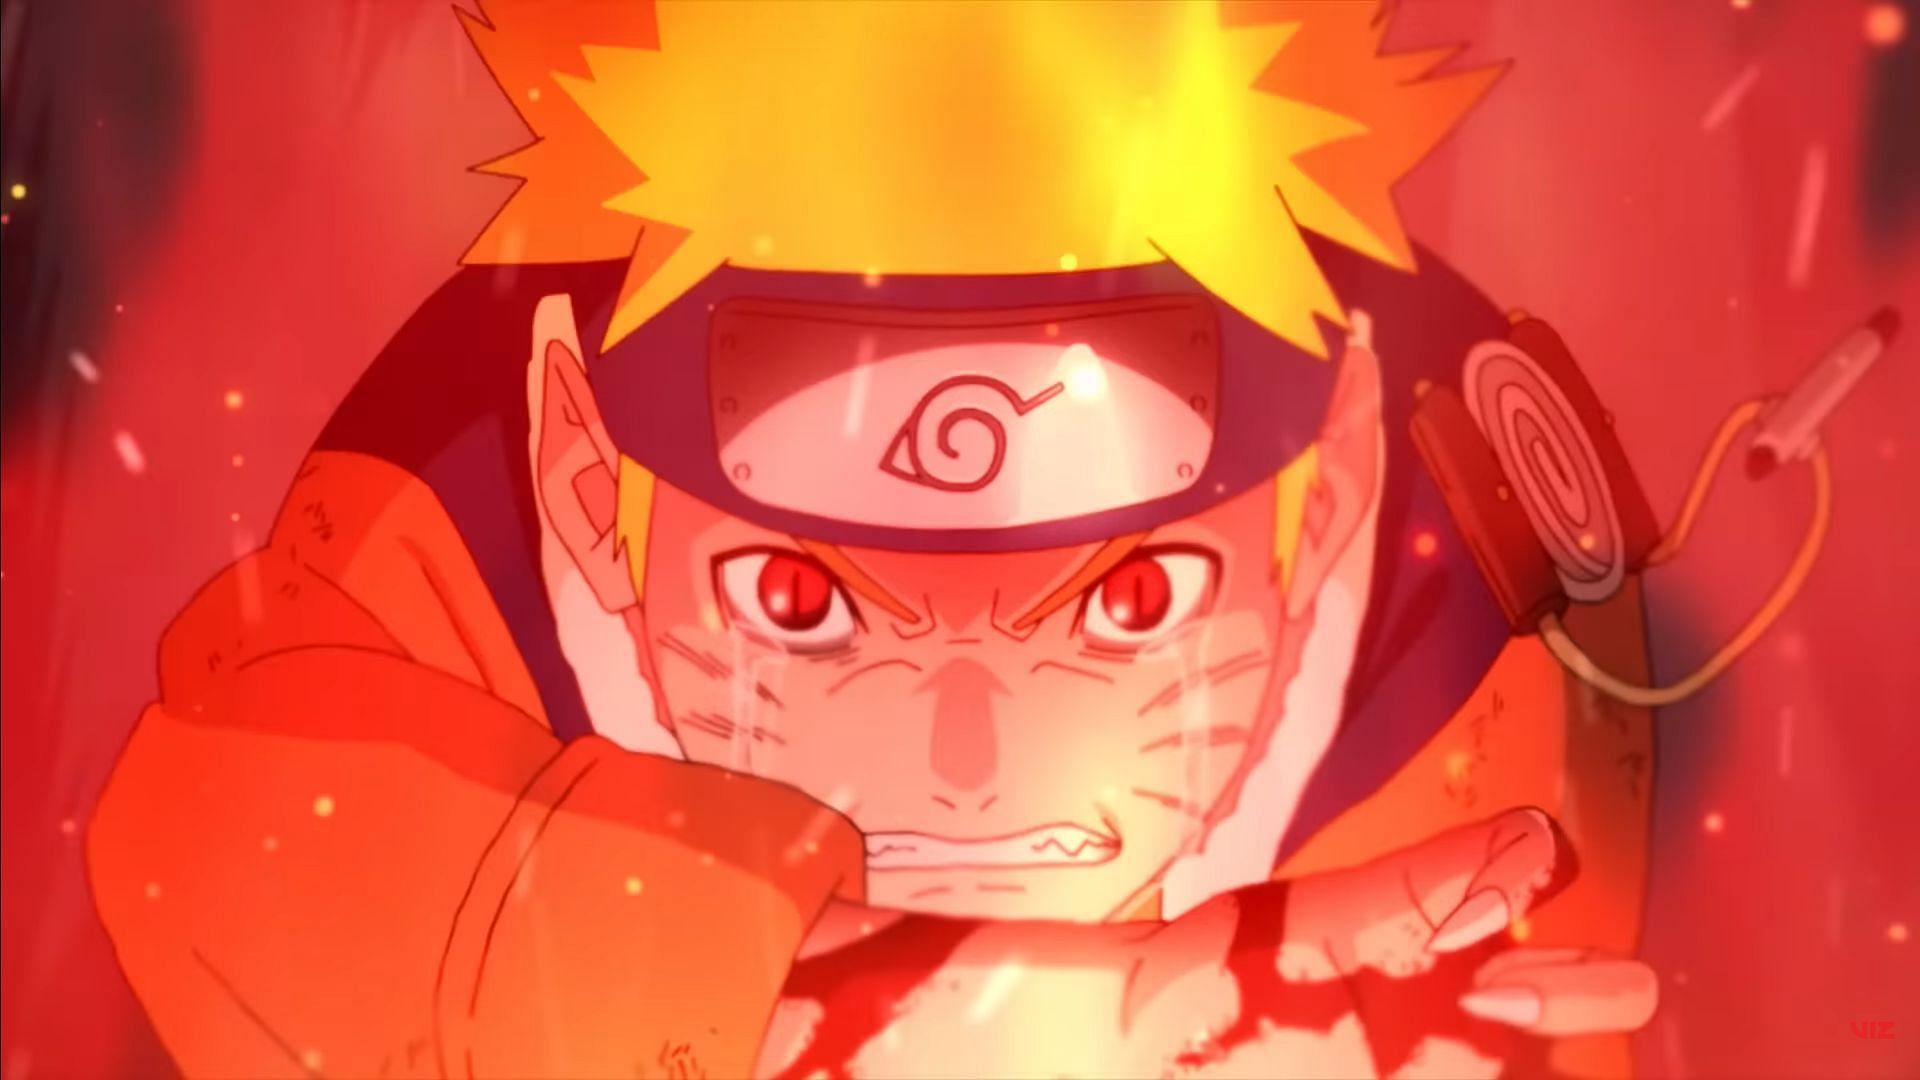 Naruto as seen in the trailer (Image via Studio Pierrot)